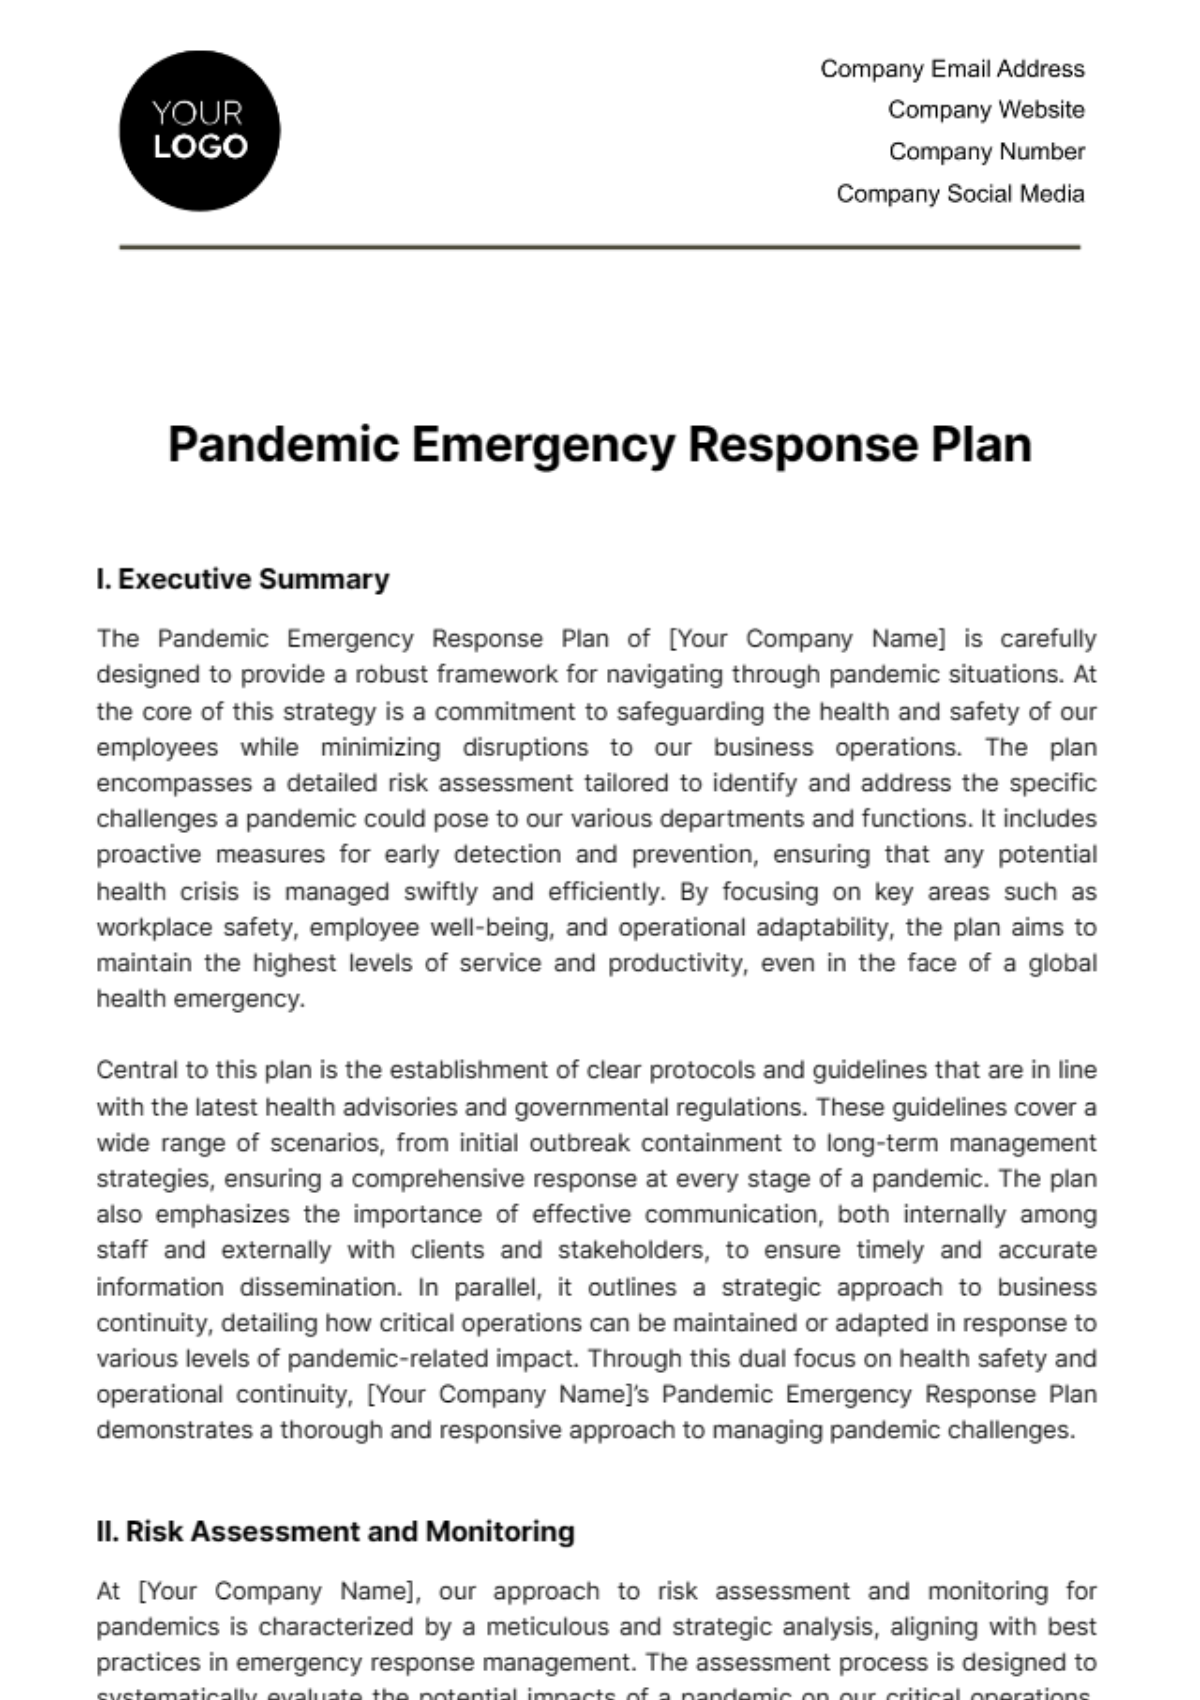 Free Pandemic Emergency Response Plan Template